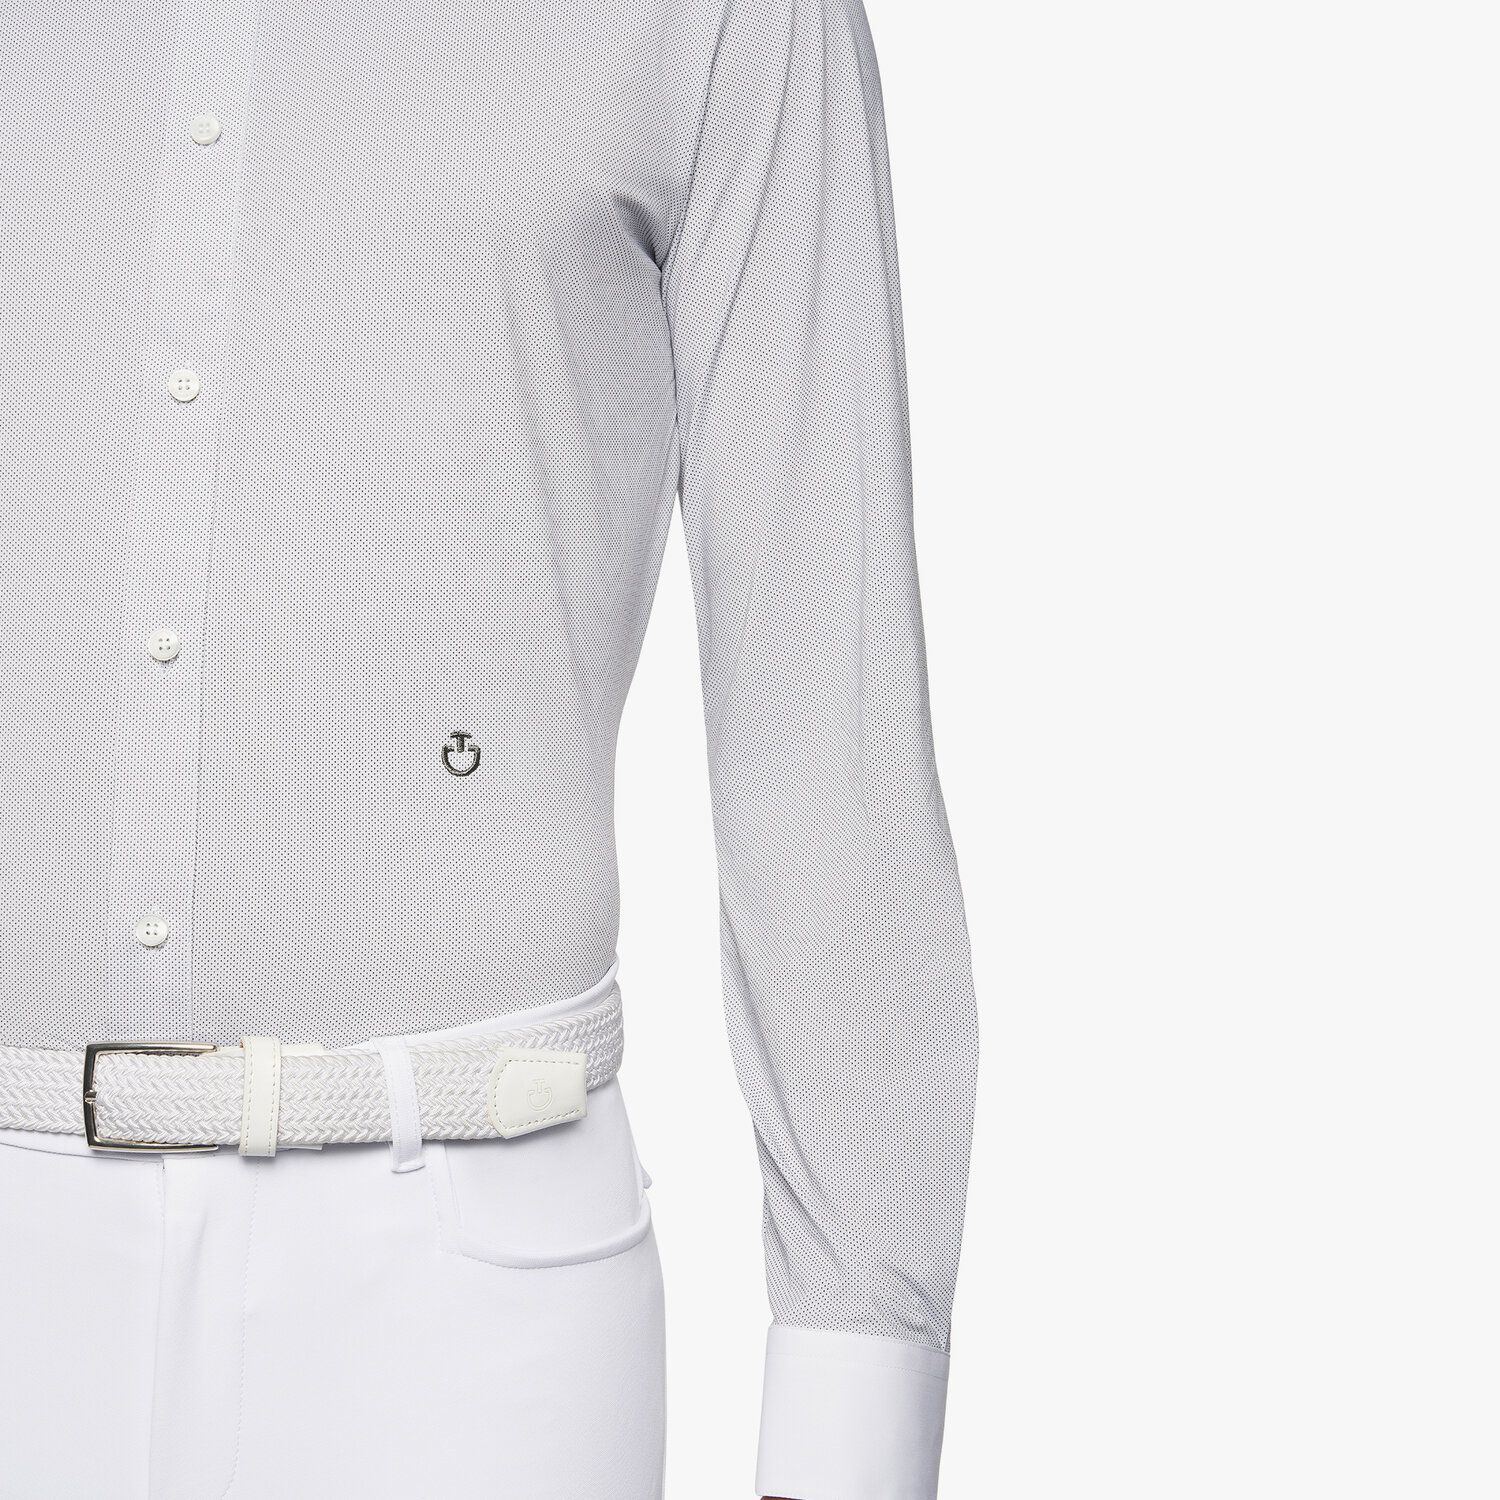 Cavalleria Toscana Men's button-down long-sleeved shirt. F009-4